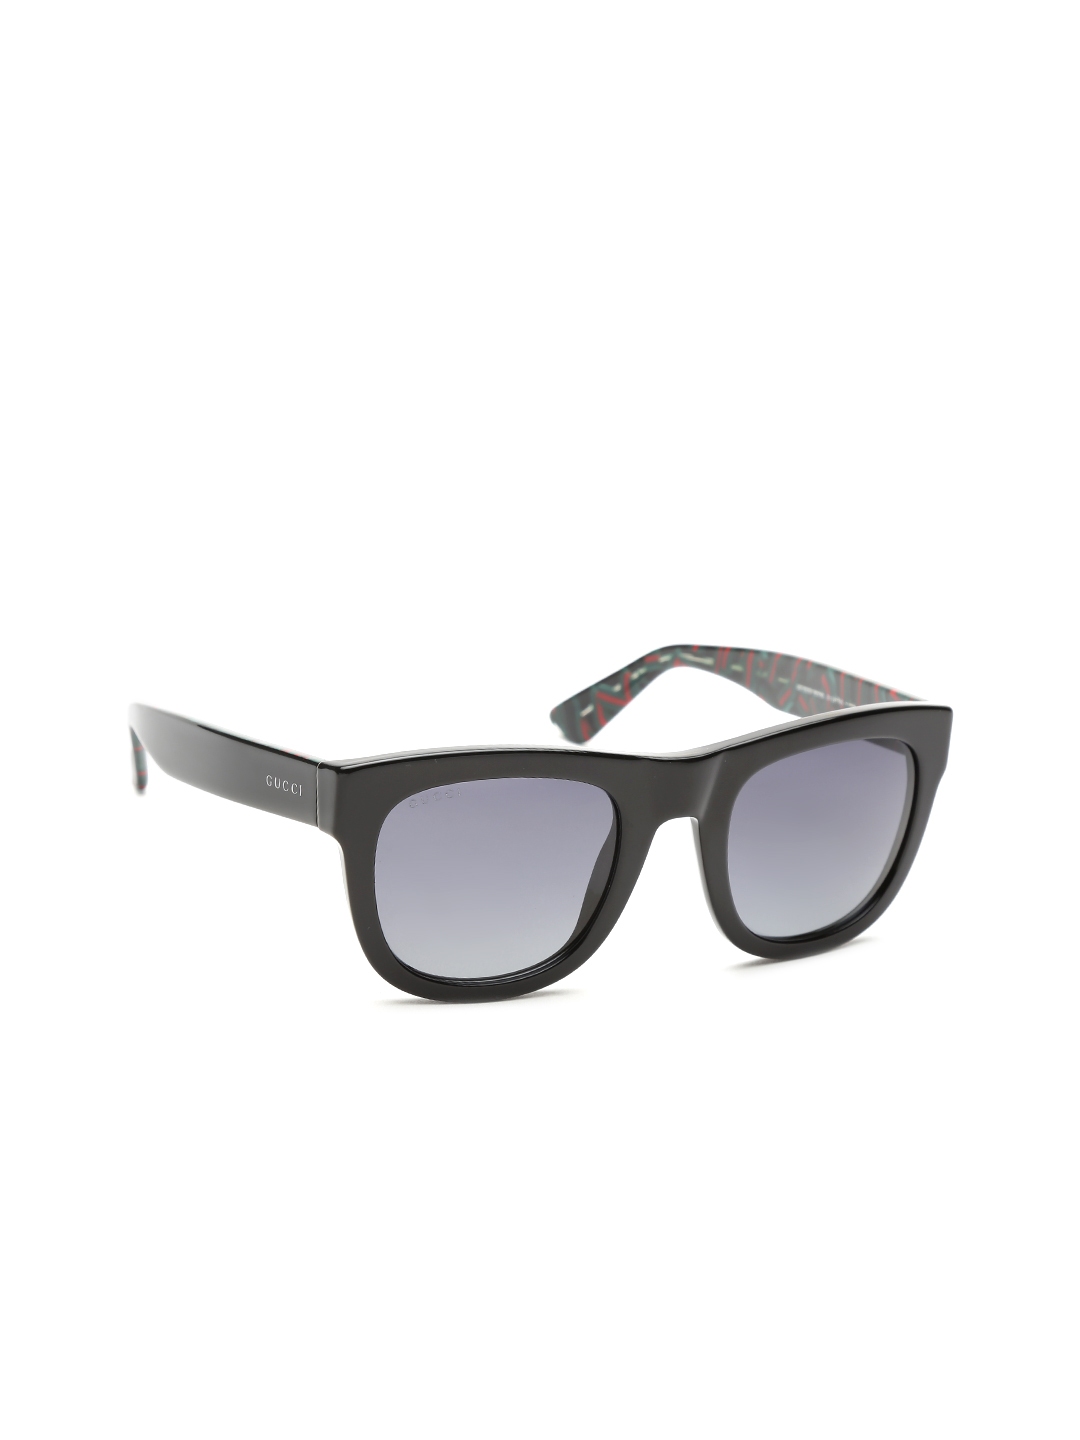 Buy Gucci Unisex Wayfarer Sunglasses GG 1099/S 807Y1 - Sunglasses for